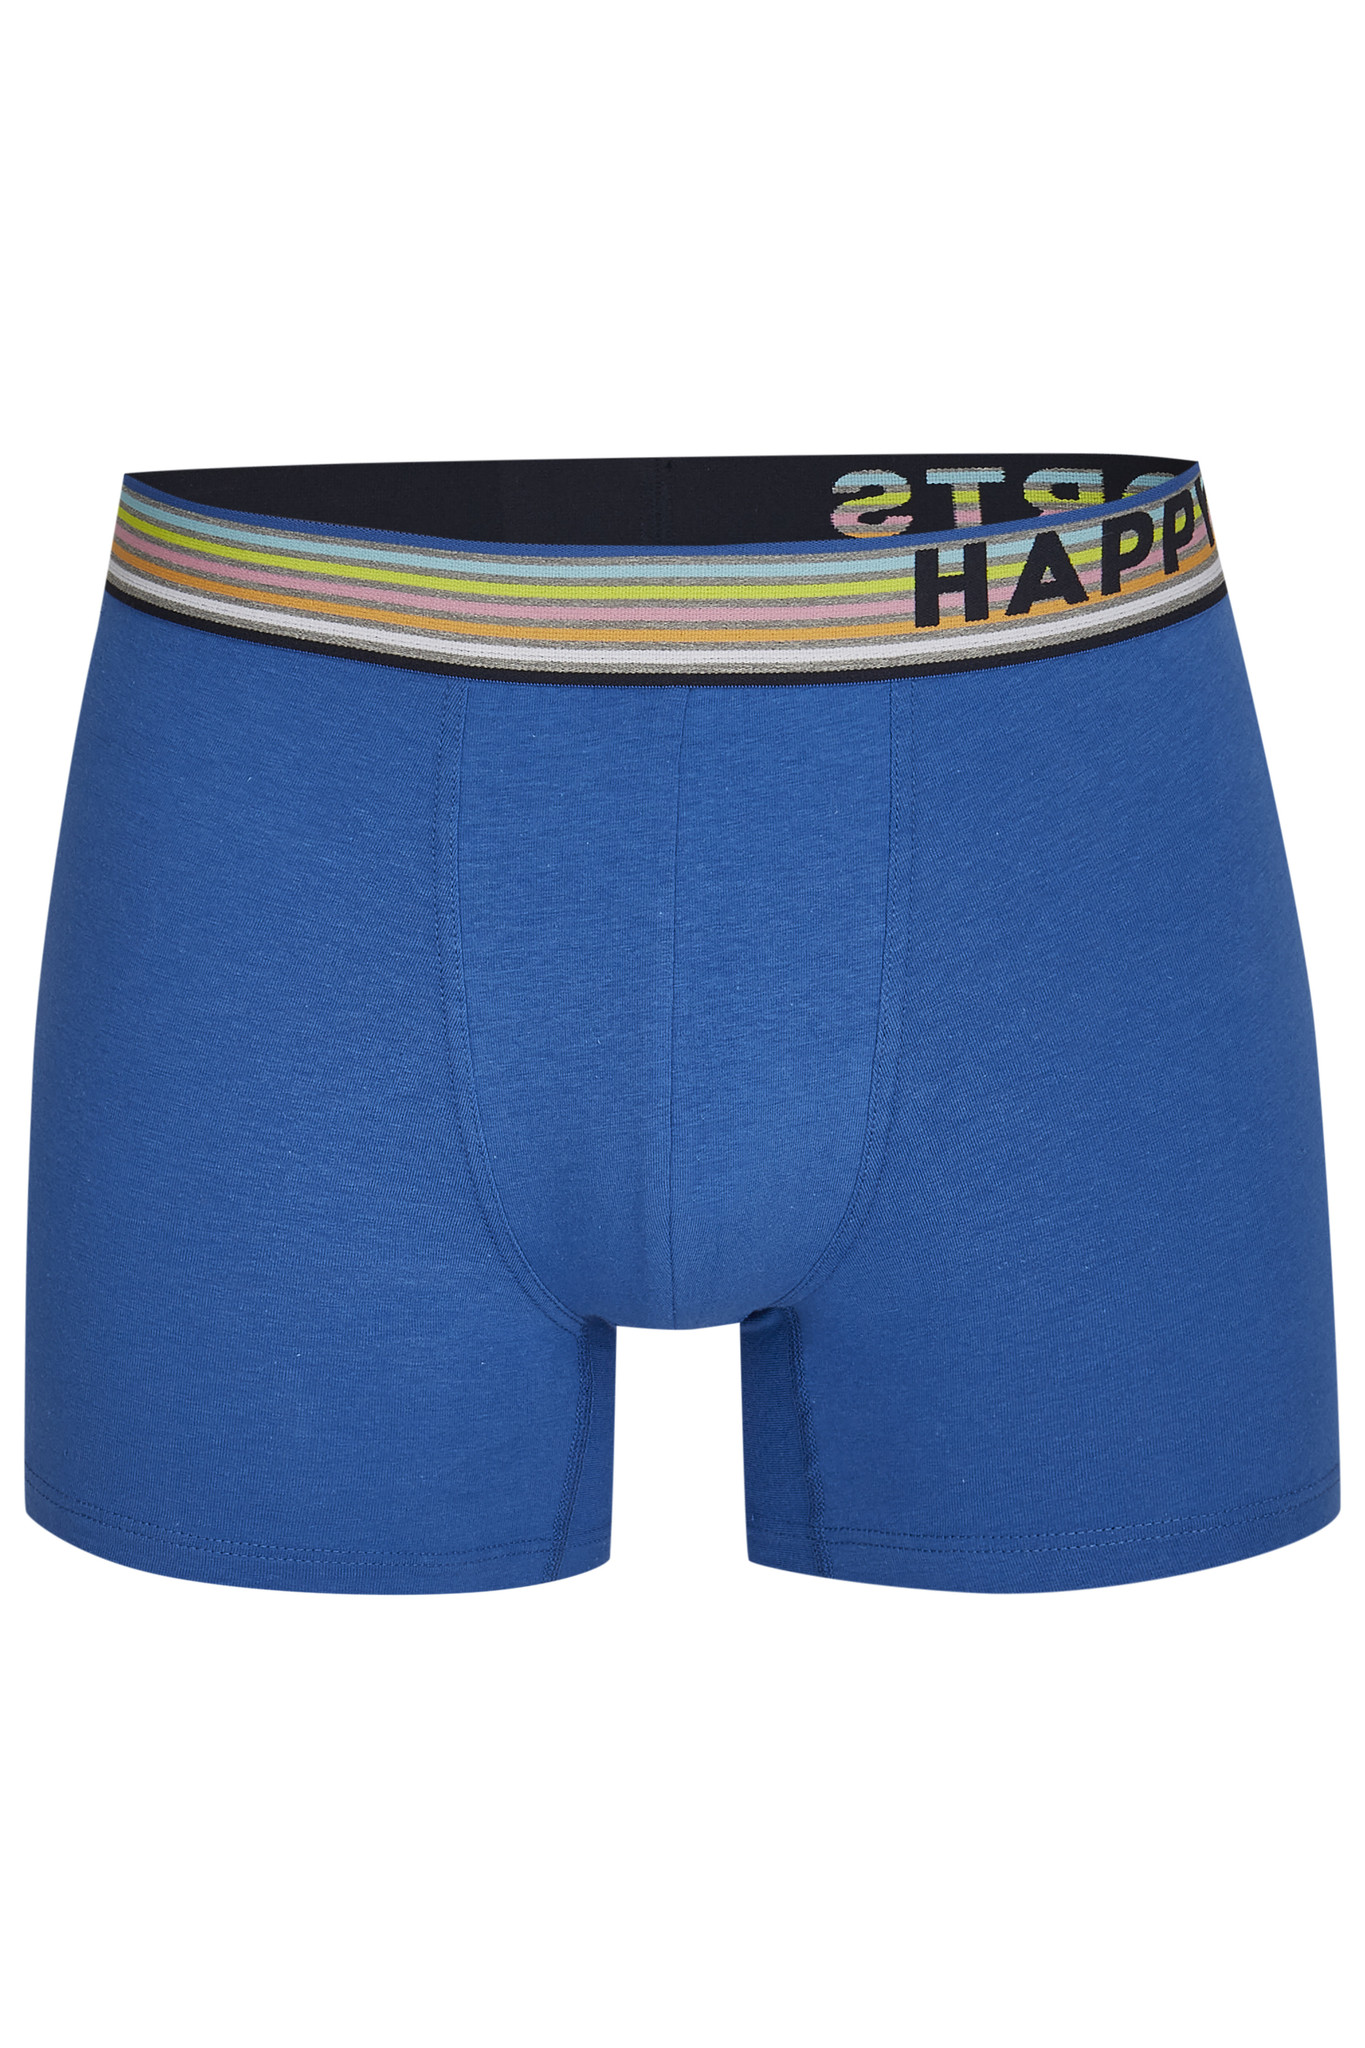 https://cdn.webshopapp.com/shops/316659/files/397055021/happy-shorts-happy-shorts-boxer-shorts-men-easter.jpg